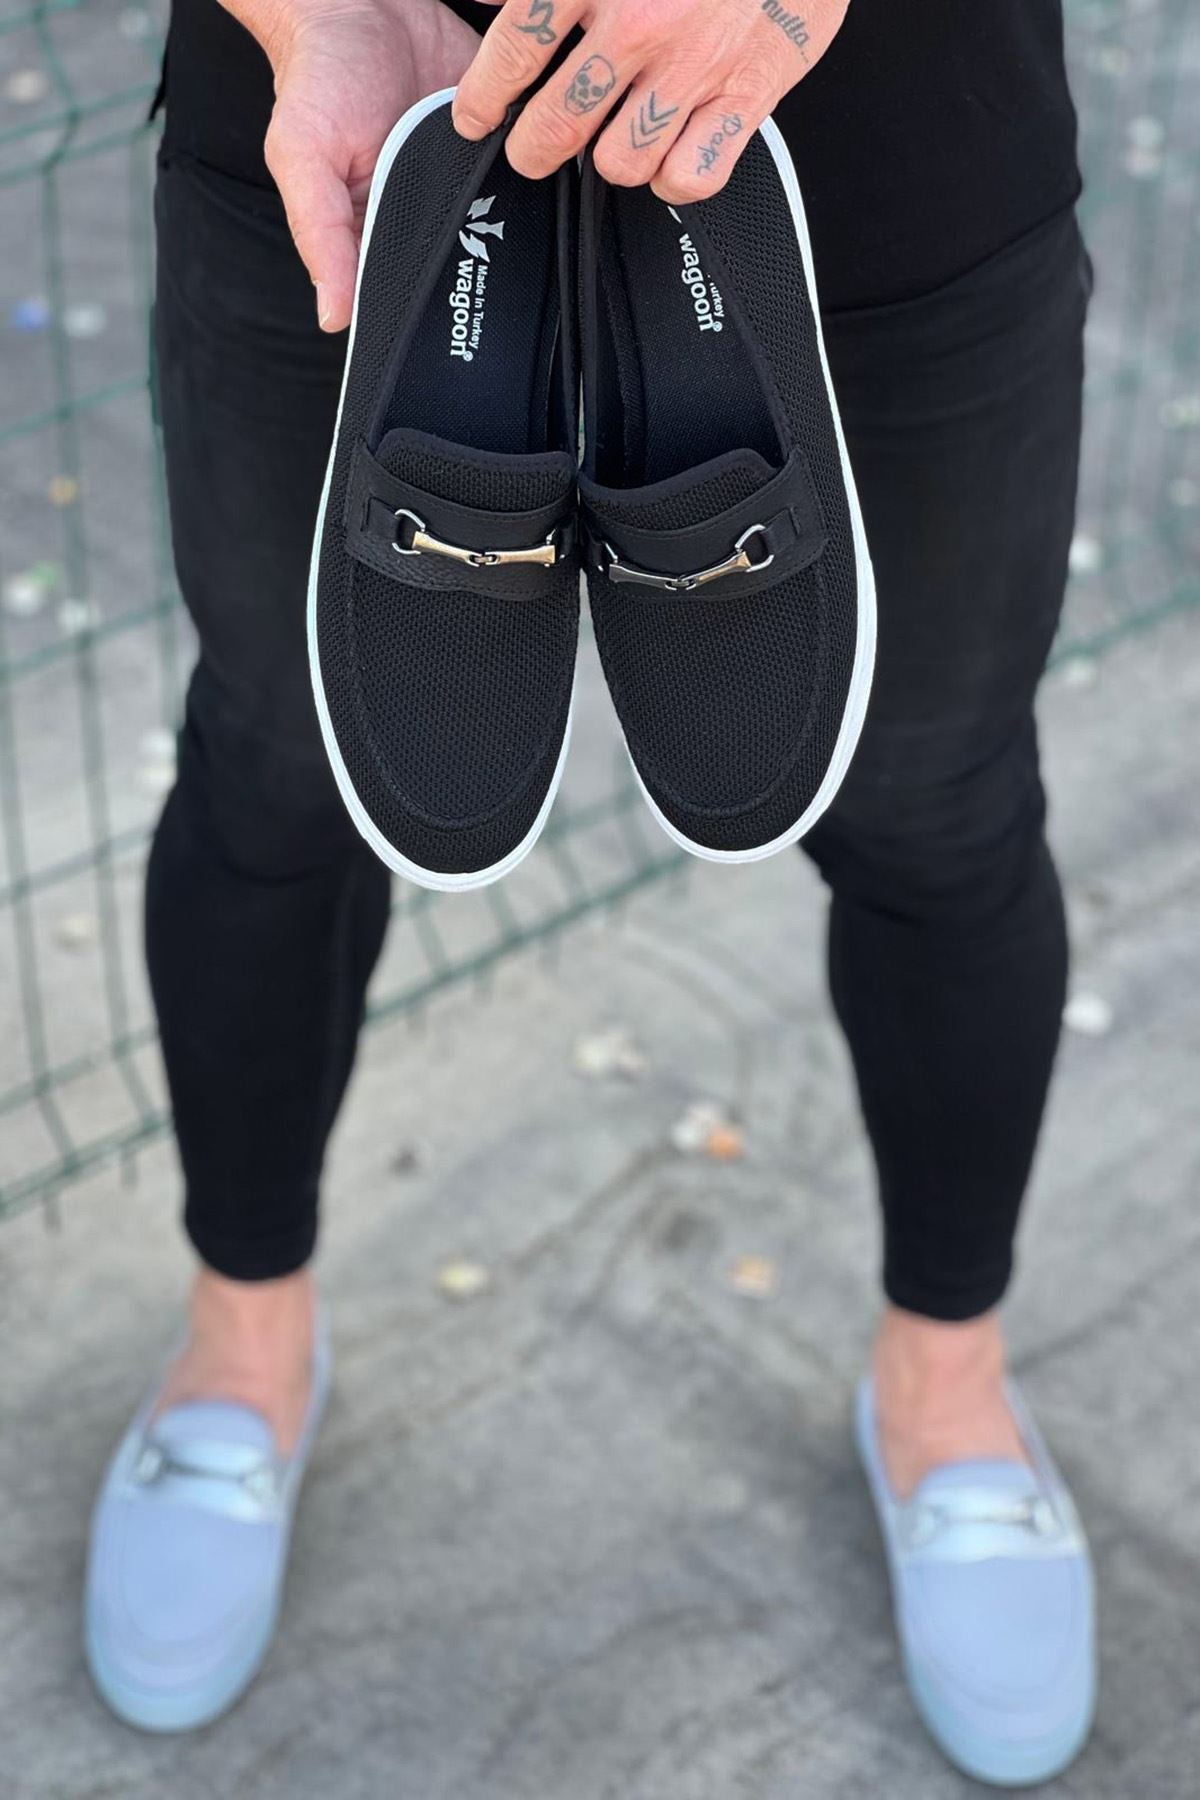 WG060 Black Knitwear Ballerina Men's Casual Shoes - STREETMODE ™